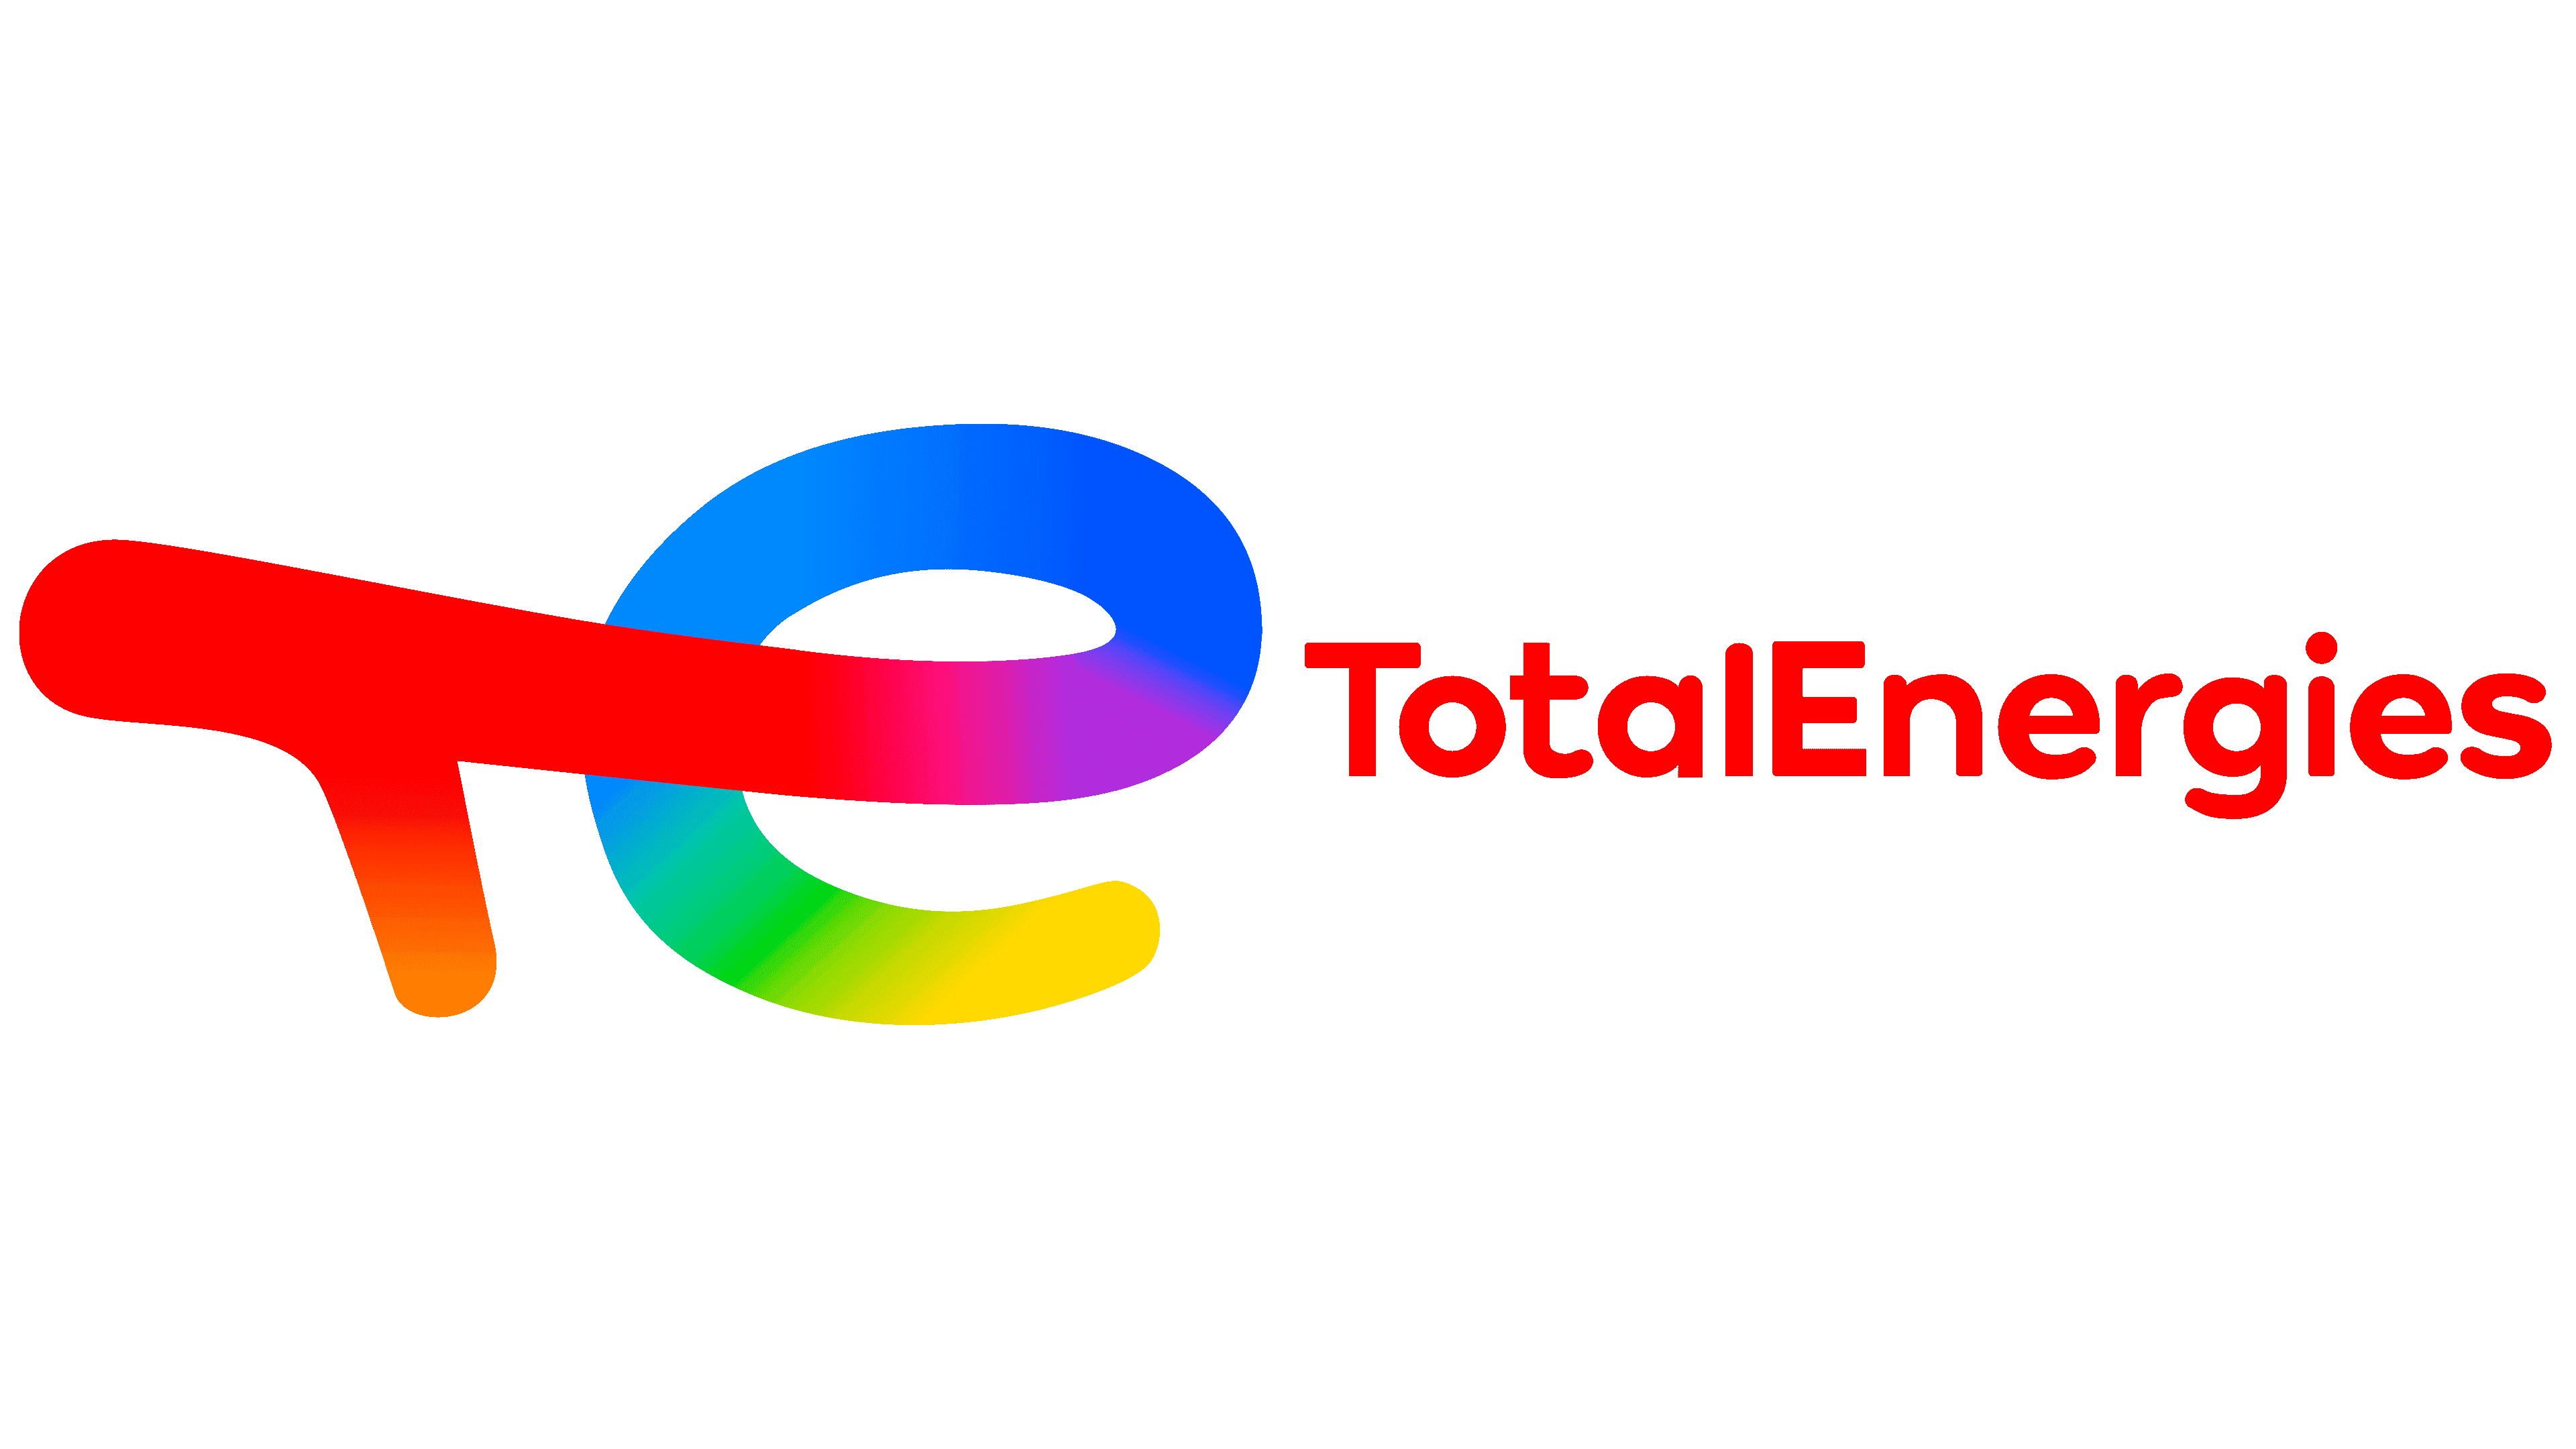 Total_energies_logo